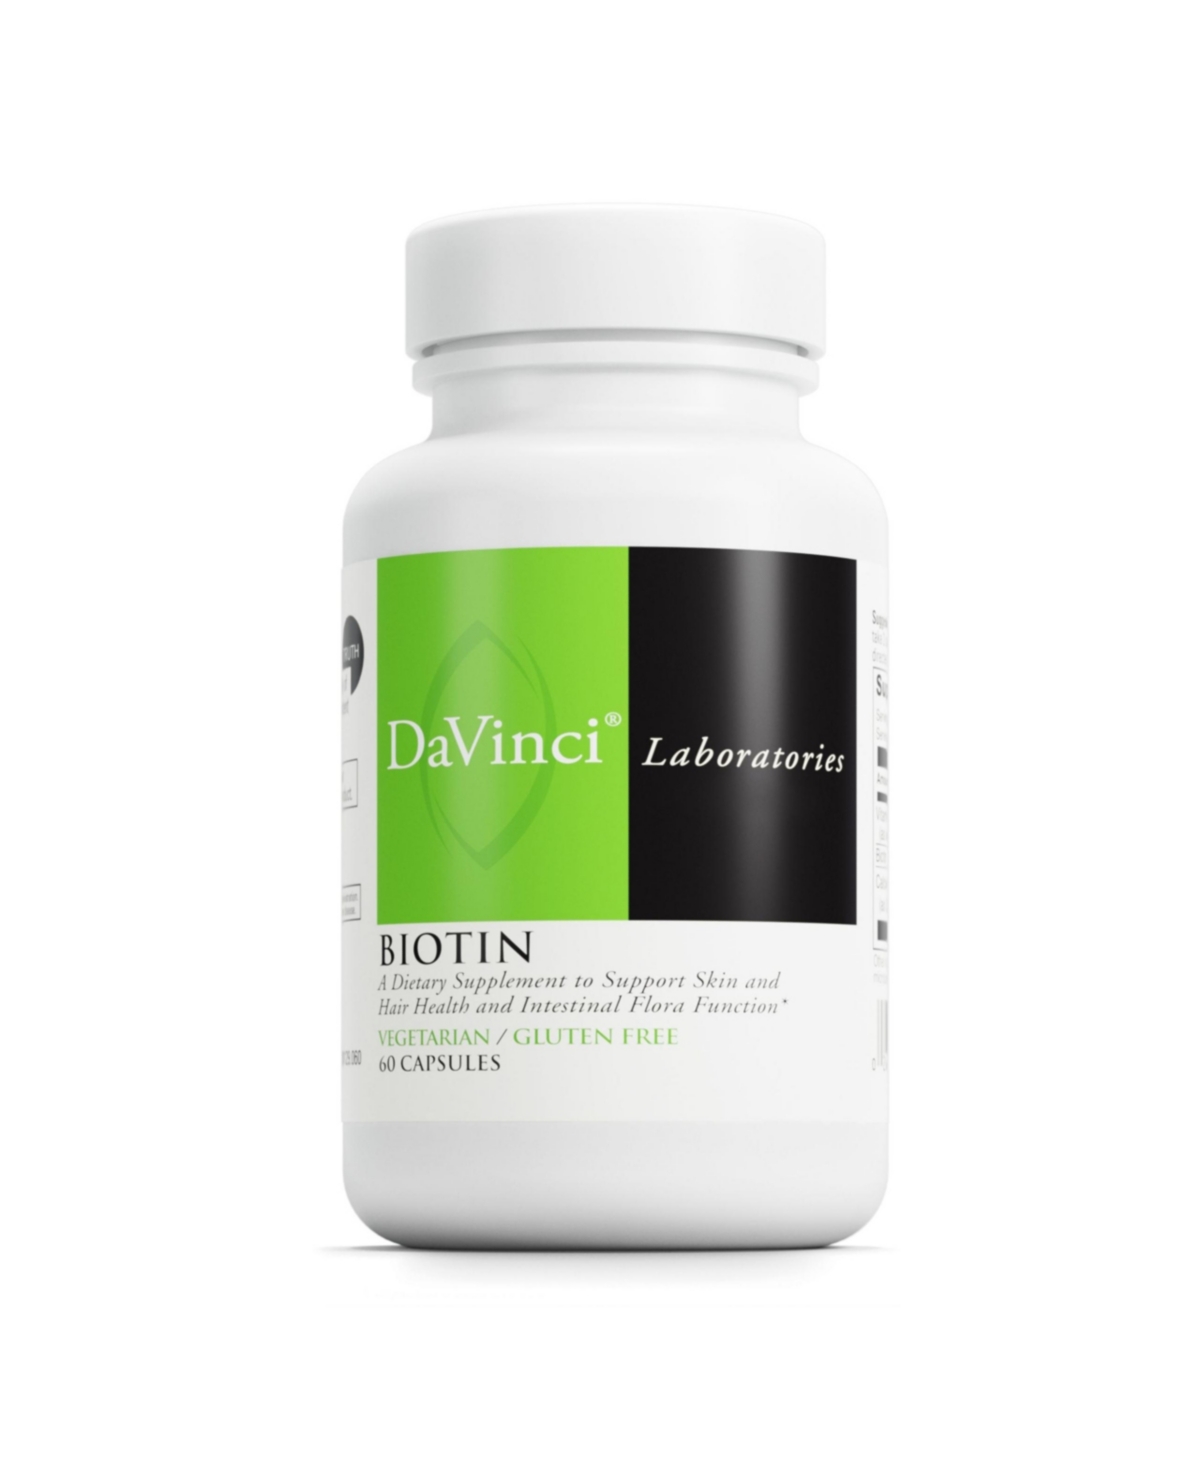 DaVinci Labs Biotin - Supports Skin & Hair Health, Intestinal Flora Function - Dietary Supplement with Vitamin C & Calcium as Ca Carbonate - Vegetaria